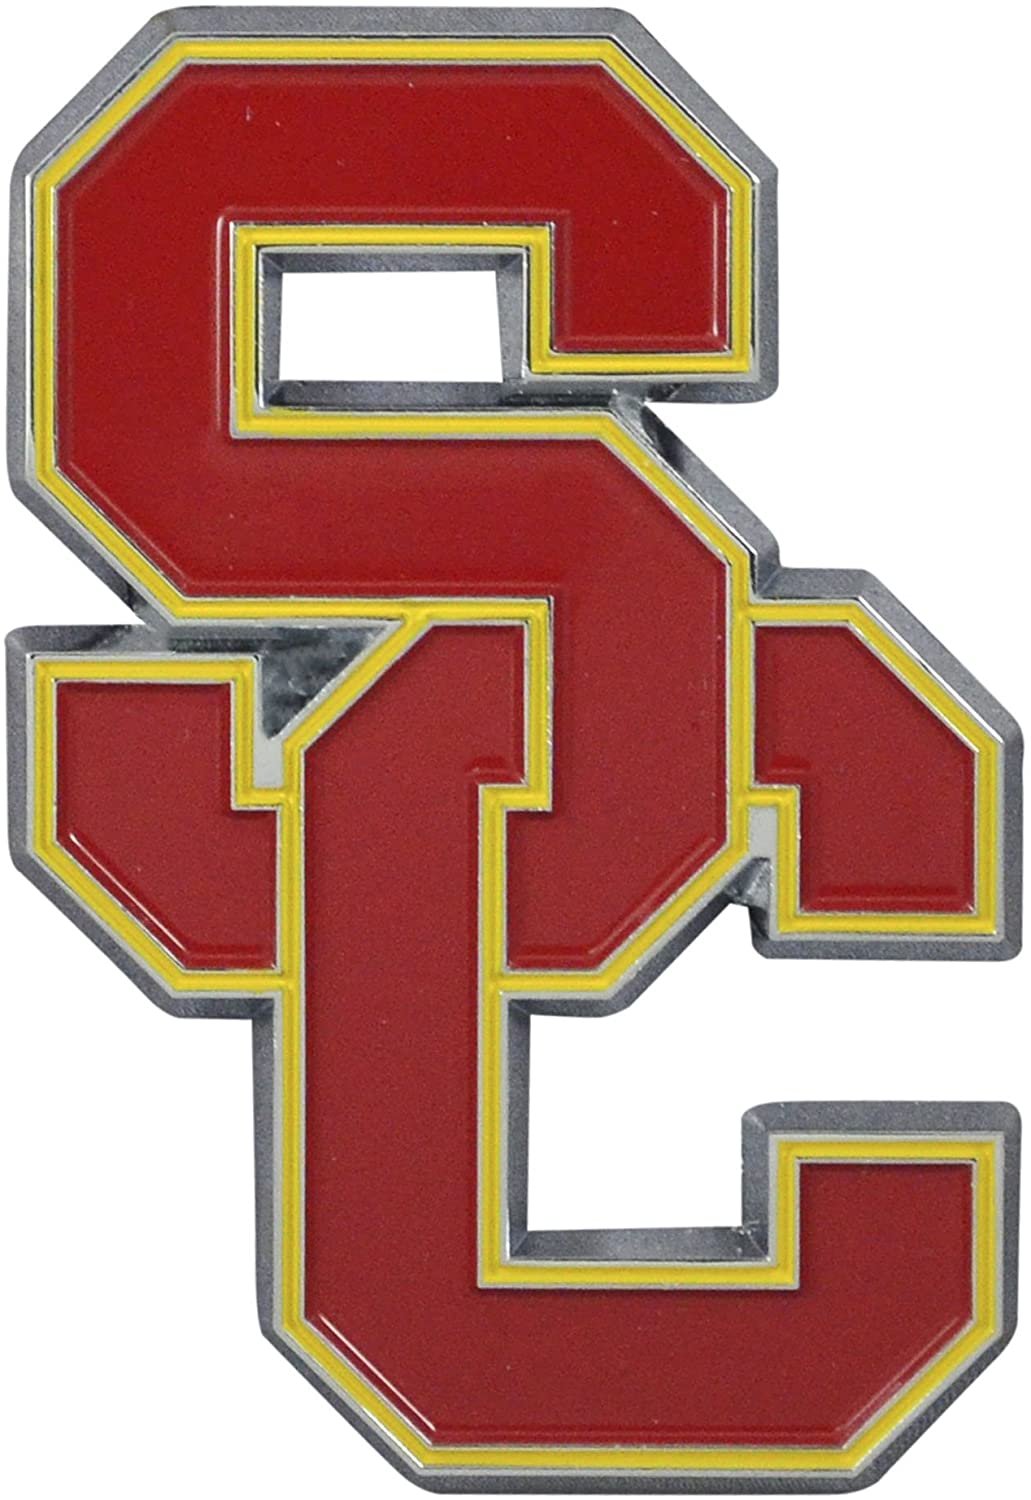 University of Southern California USC Trojans Premium Solid Metal Raised Auto Emblem, Team Color, Shape Cut, Adhesive Backing